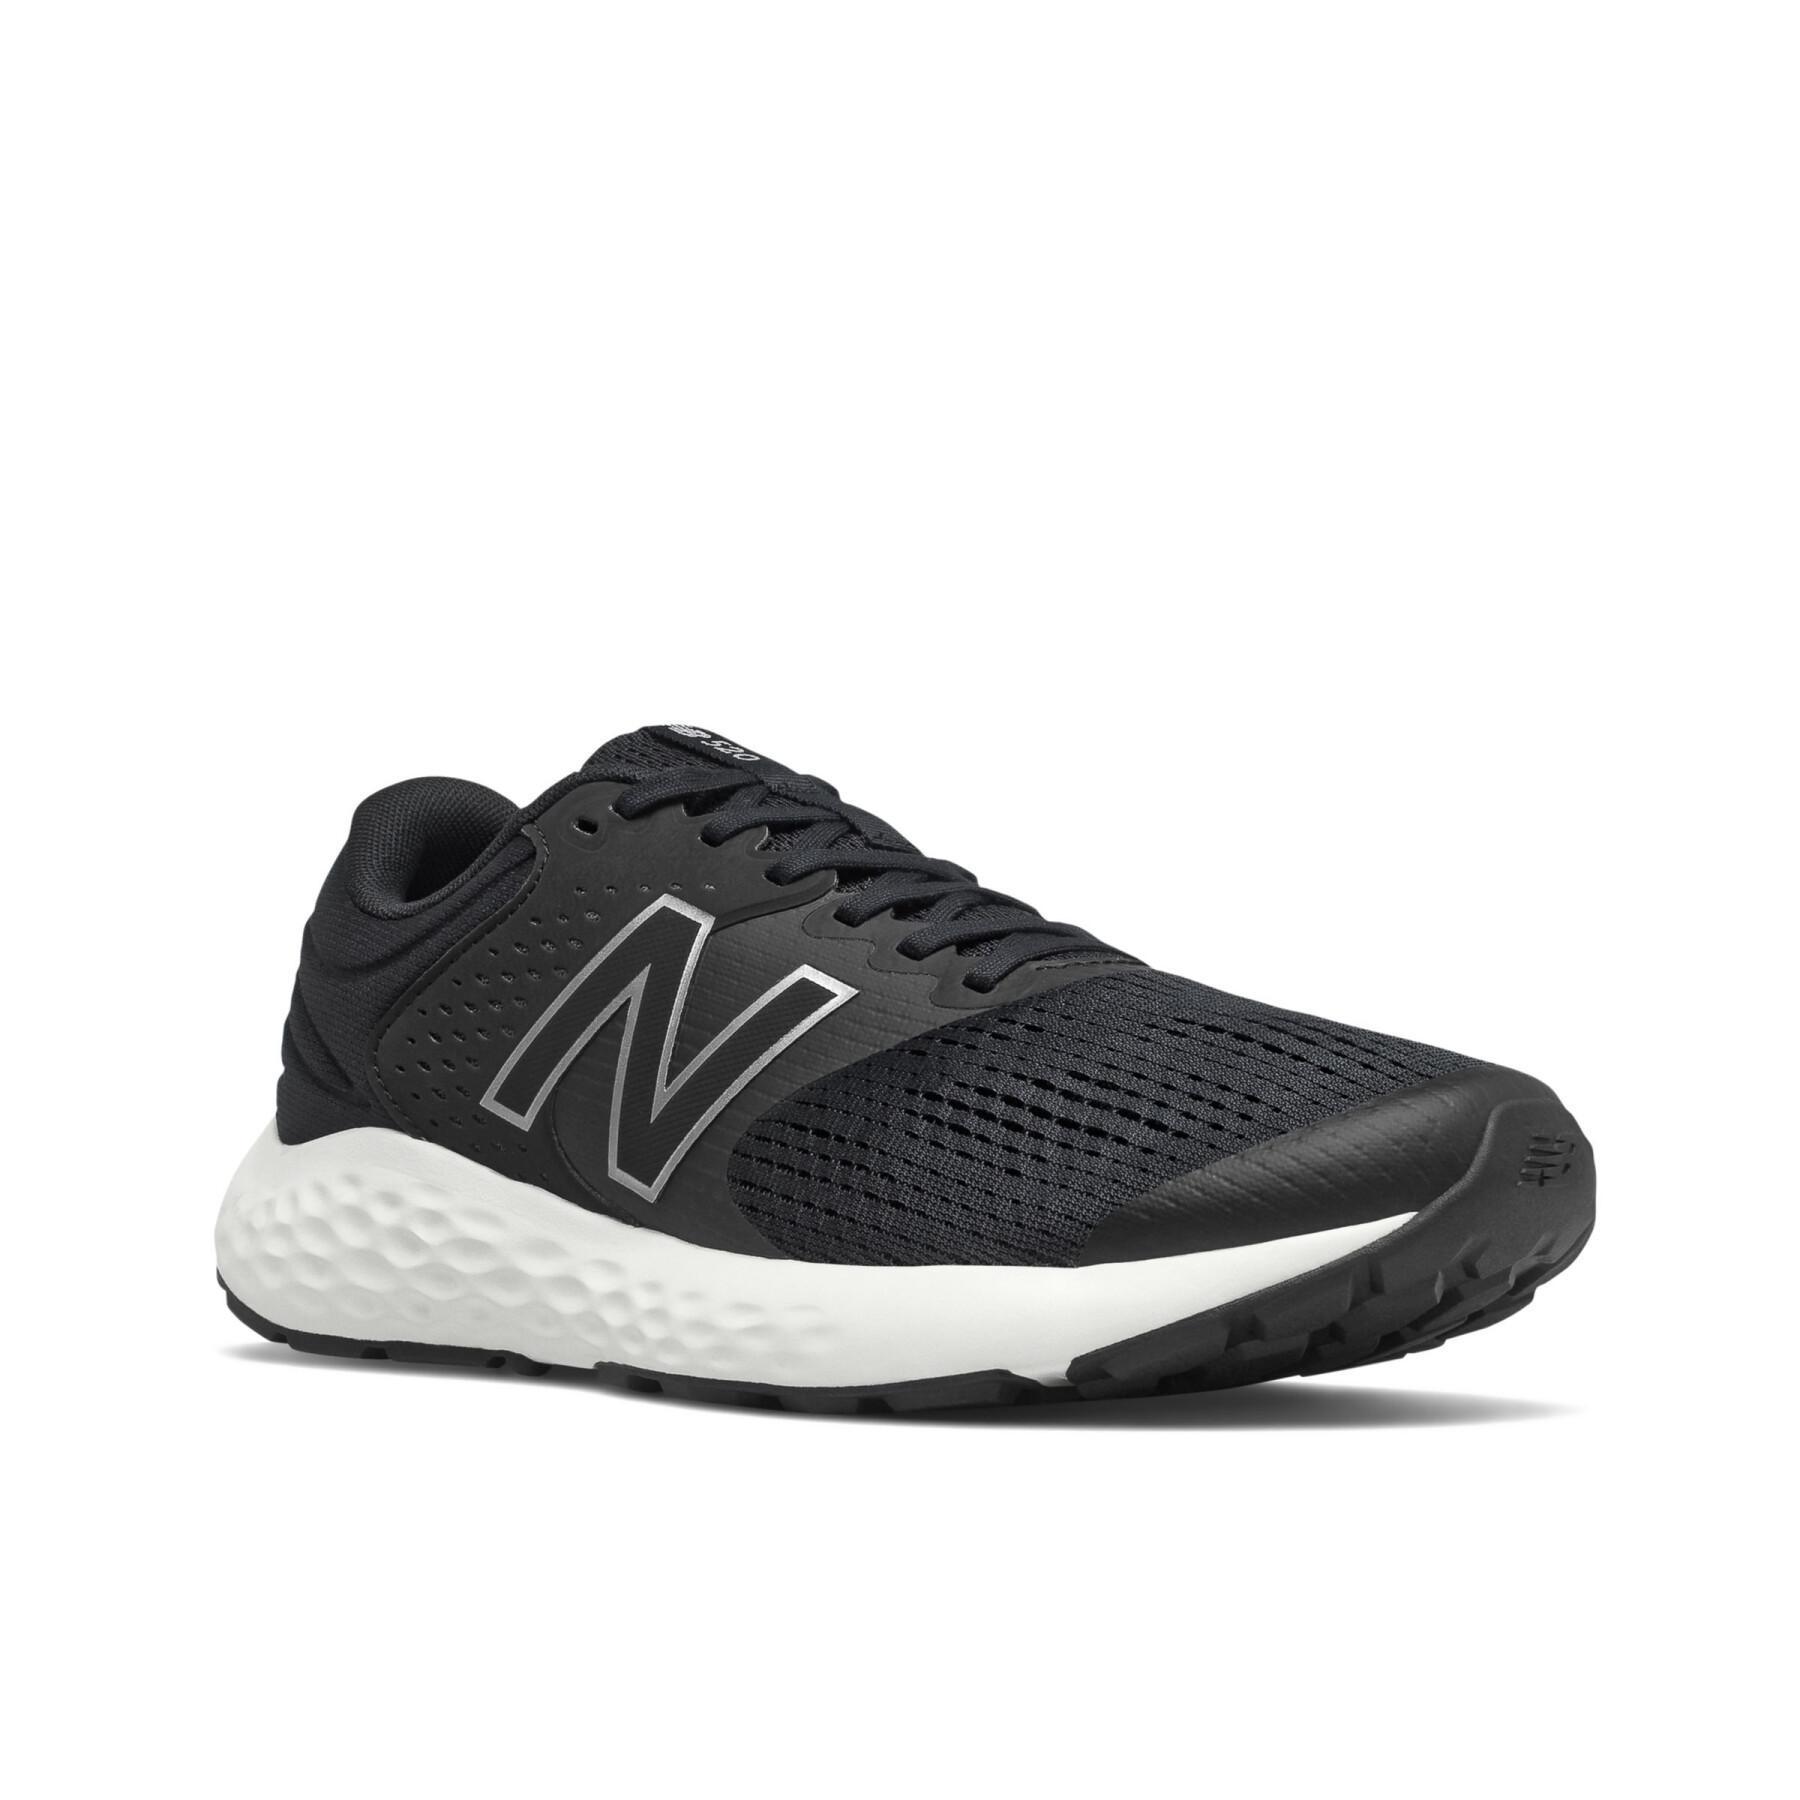 Schuhe New Balance 520v7